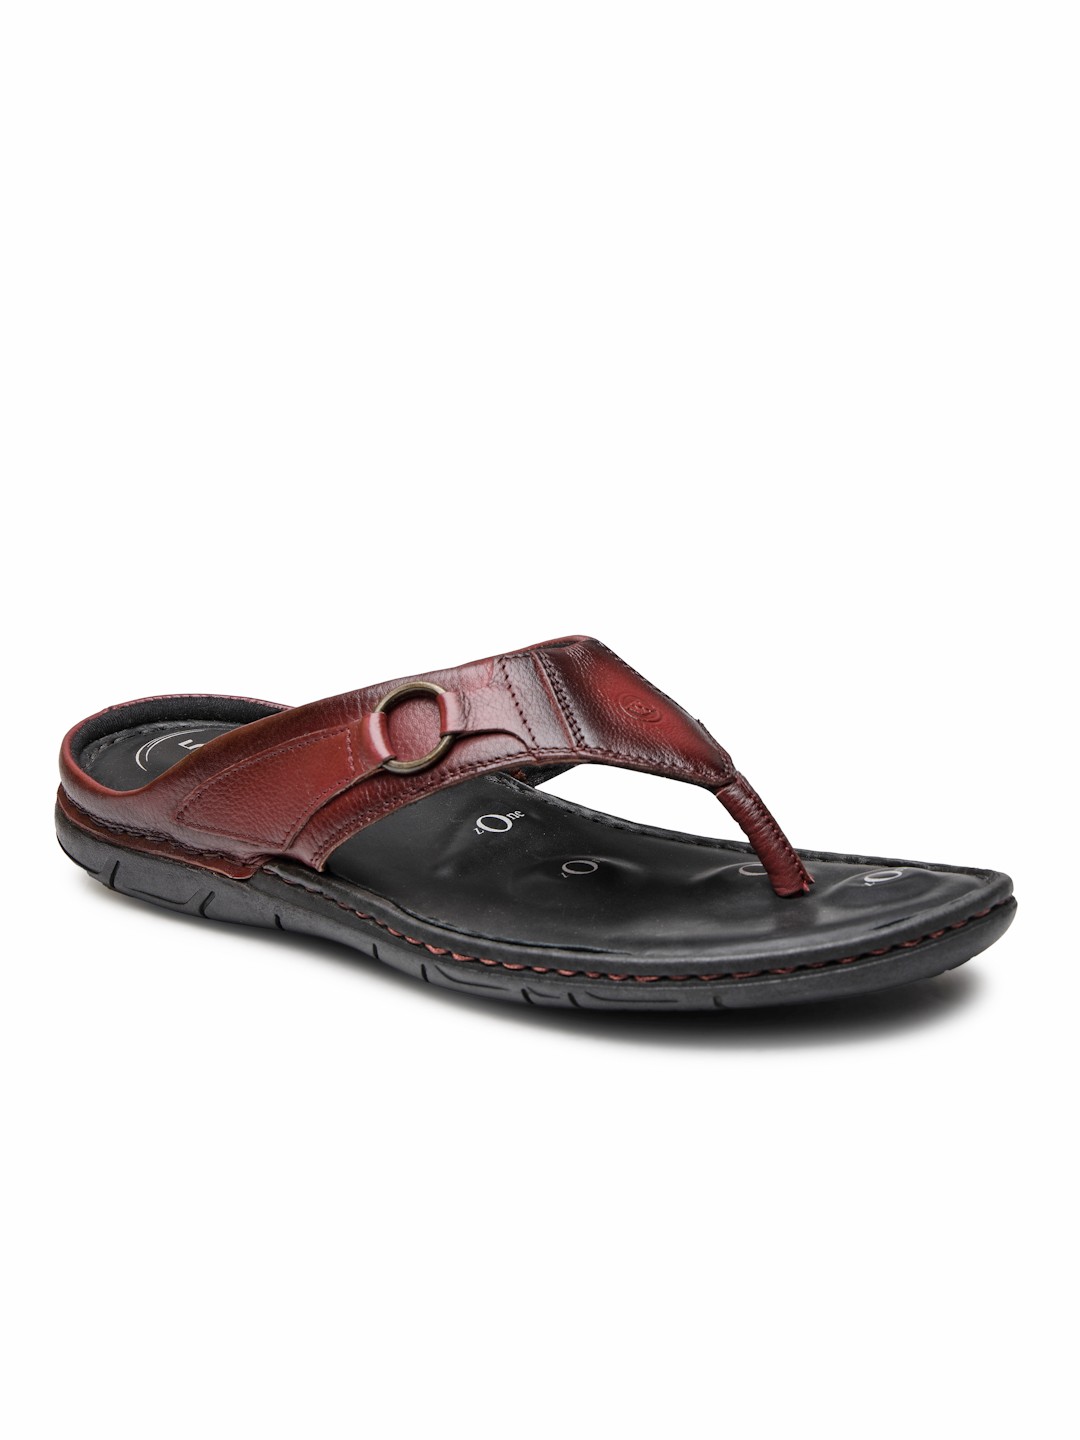 Buy Von Wellx Germany Comfort Men's Brown Slippers Riley Online in Chandigarh